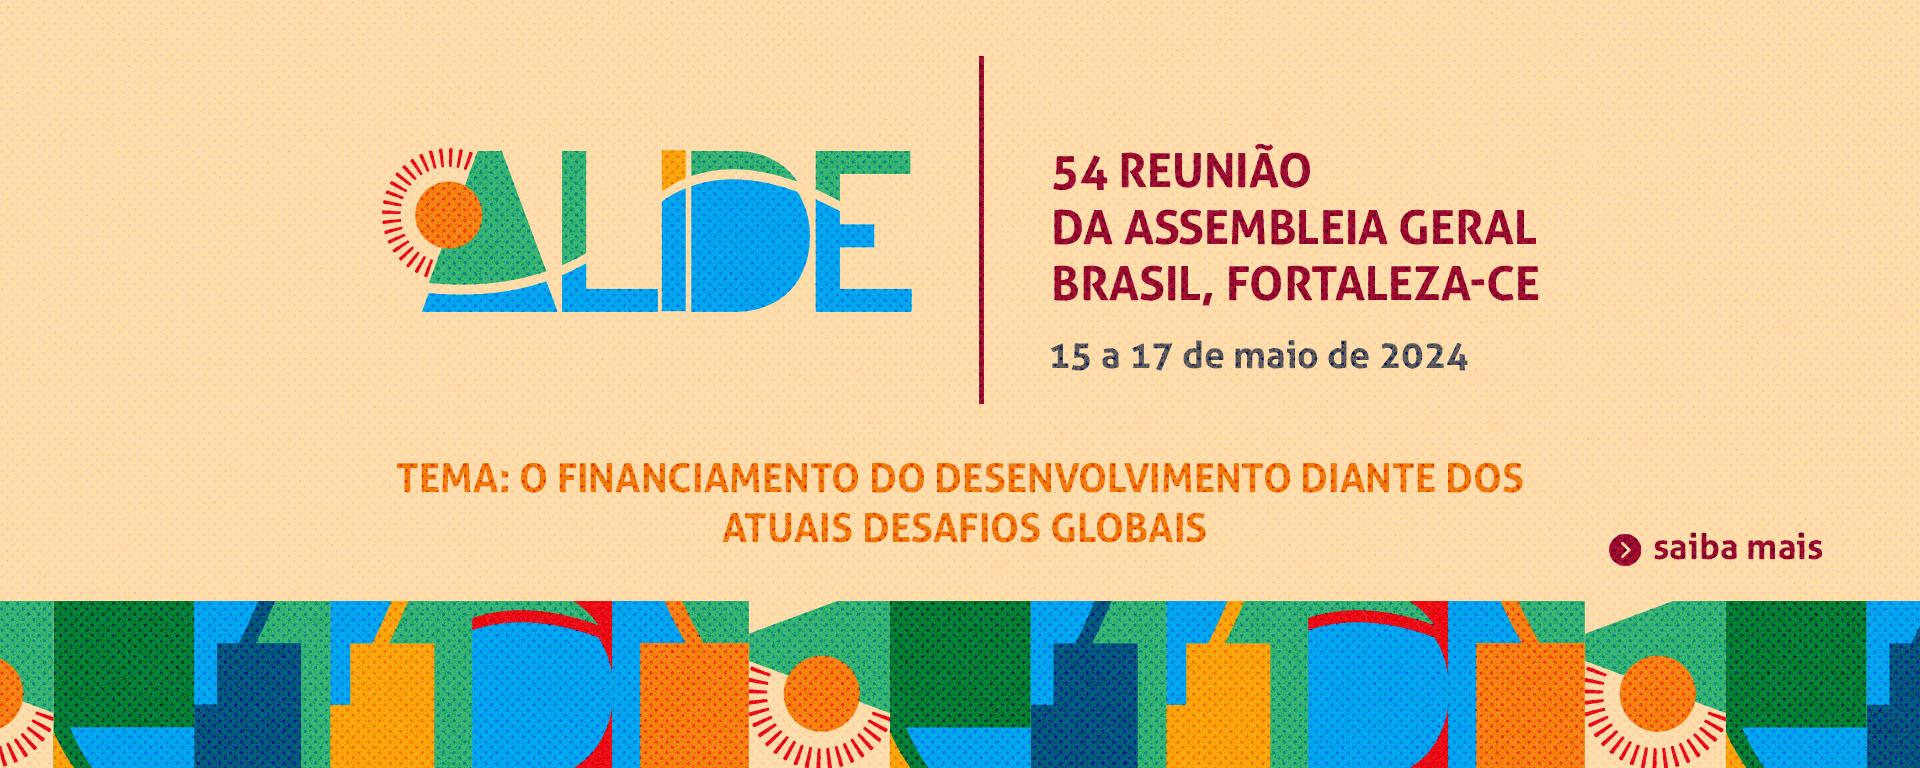 54 Reunião da Assembleia Geral. Brasil, Fortaleza - Ceará.
15 a 17 de maio de 2024.
Tema: Financiamento para o desenvolvimento diante aos desafio globais atuais.